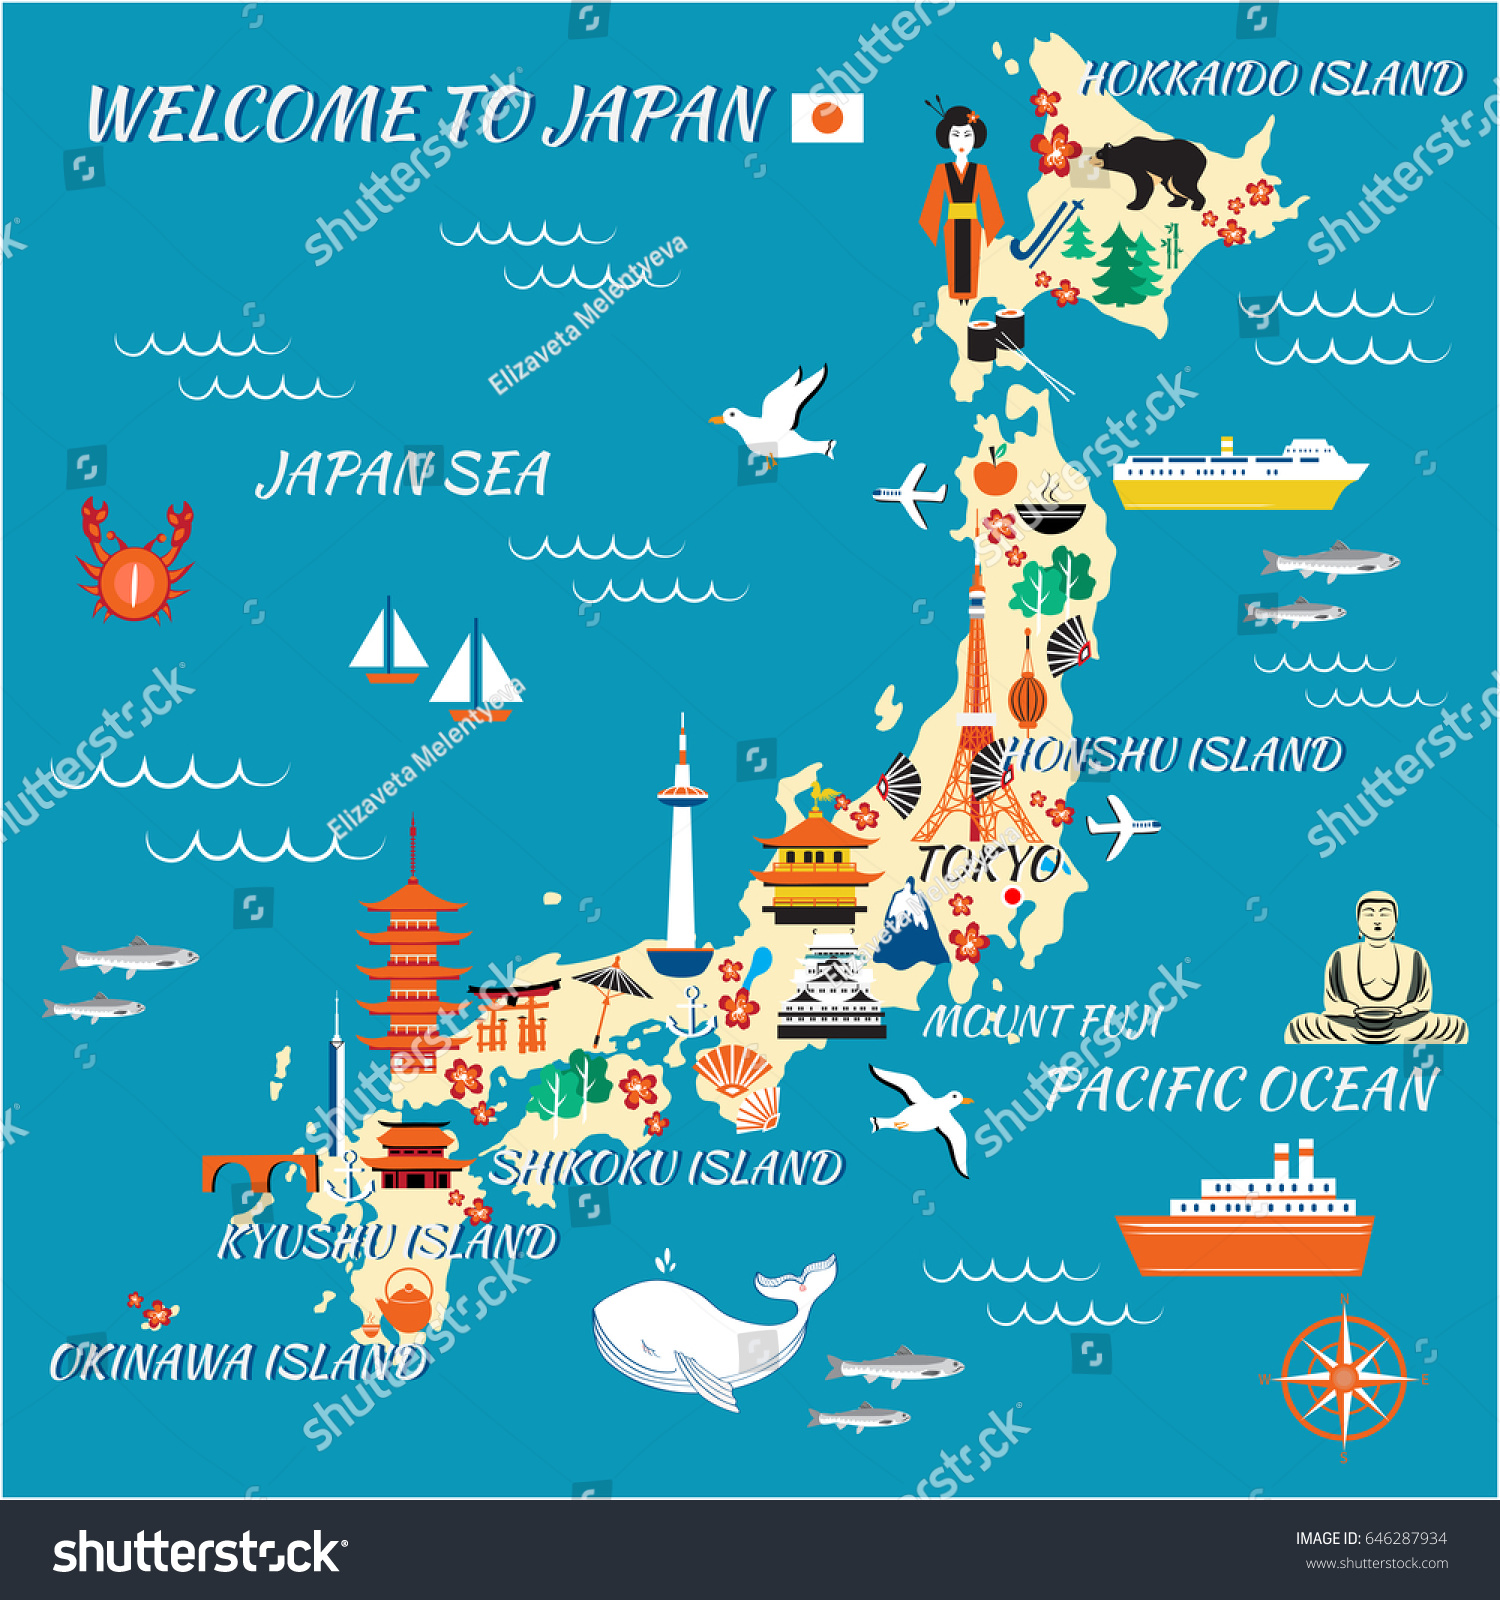 Japan_map_shinto Images, Stock Photos & Vectors | Shutterstock